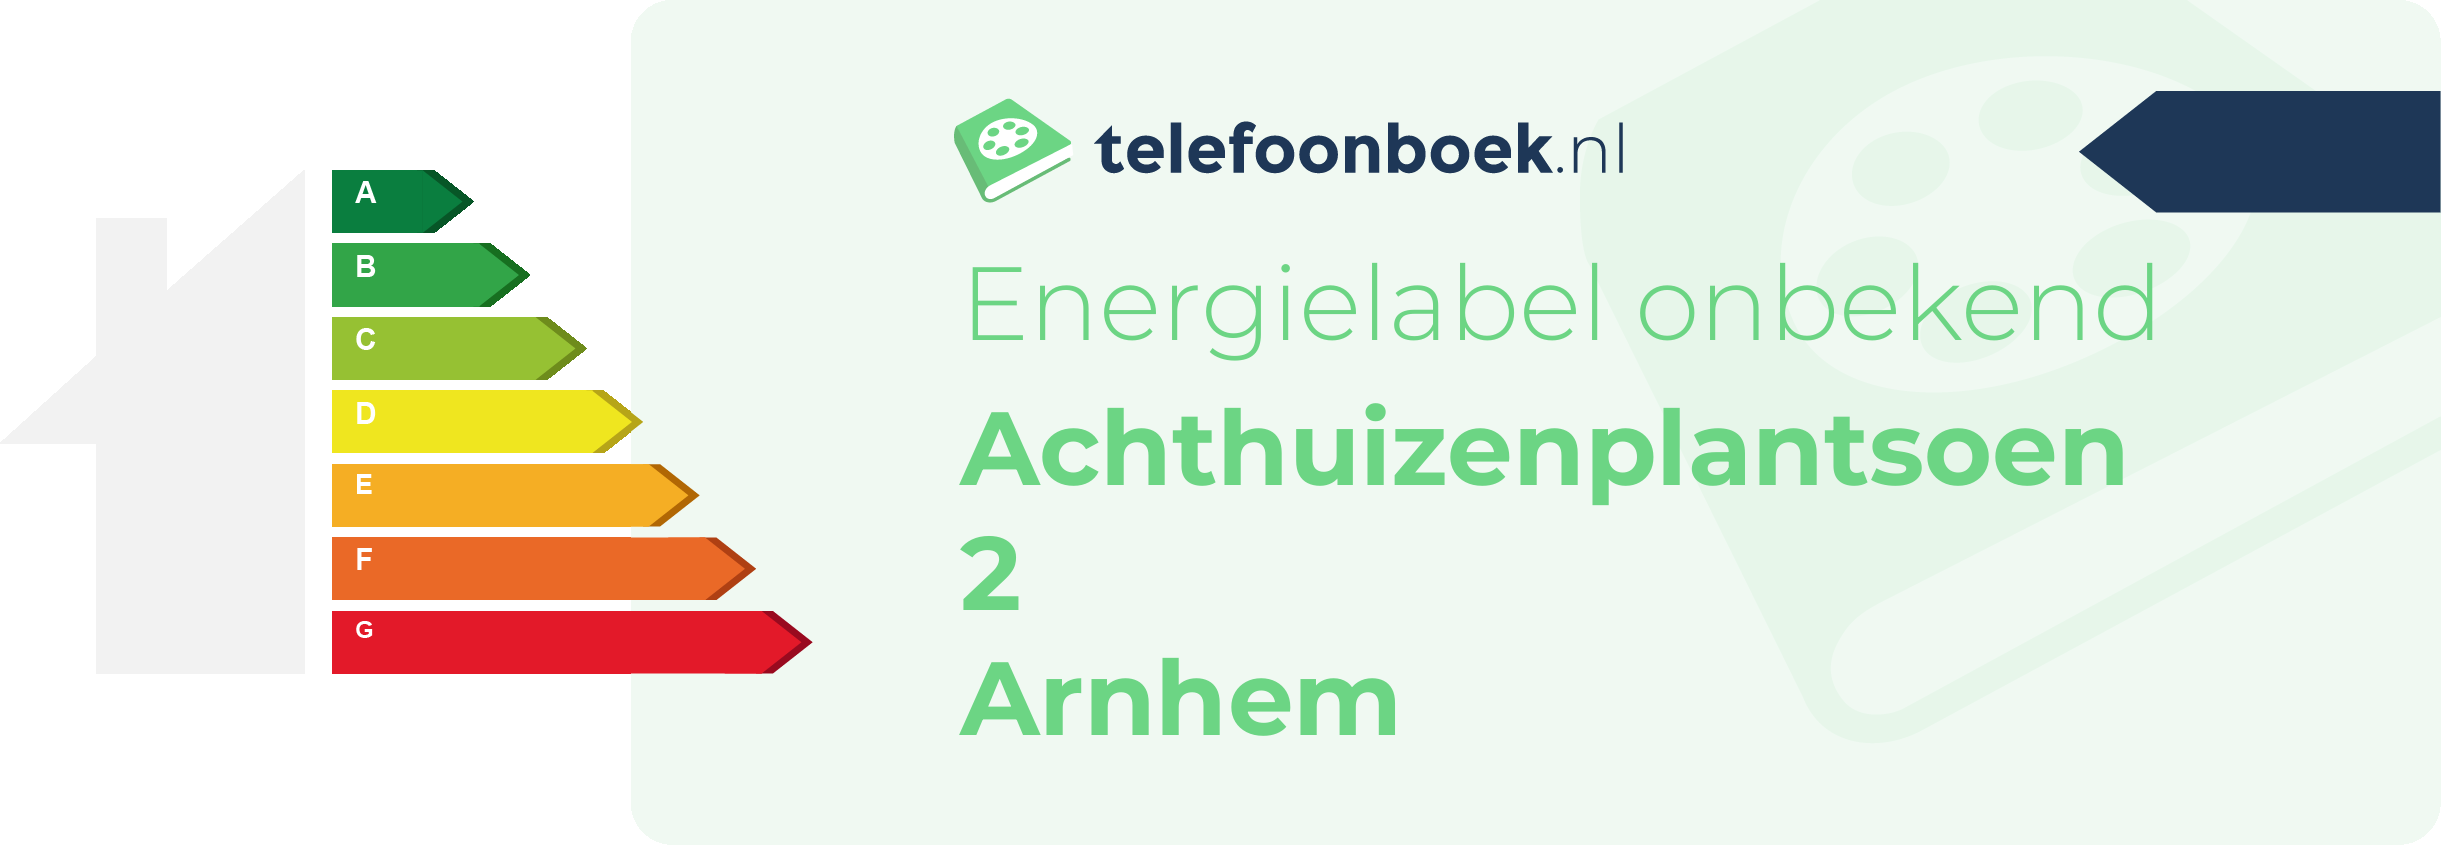 Energielabel Achthuizenplantsoen 2 Arnhem